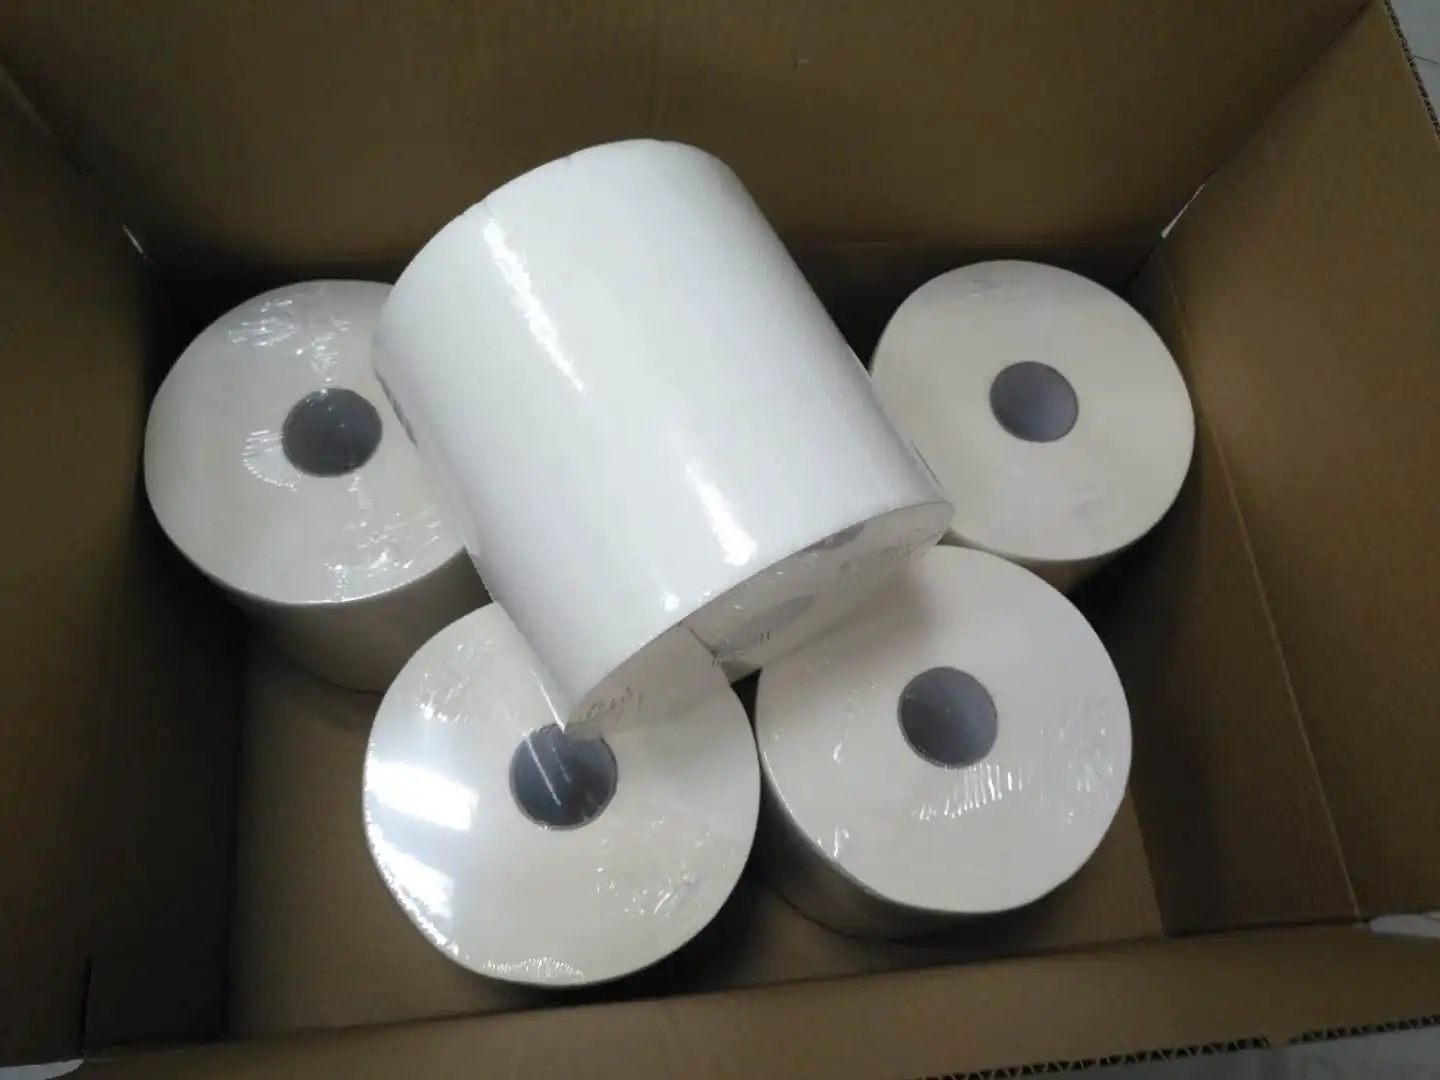 Hand Tissue Sheet Towel in Rolls Virgin Pulp Paper Towel Hand Jumbo Roll Tissue 2 Ply Paper Free White Toilet Tissue 1/2 Ply